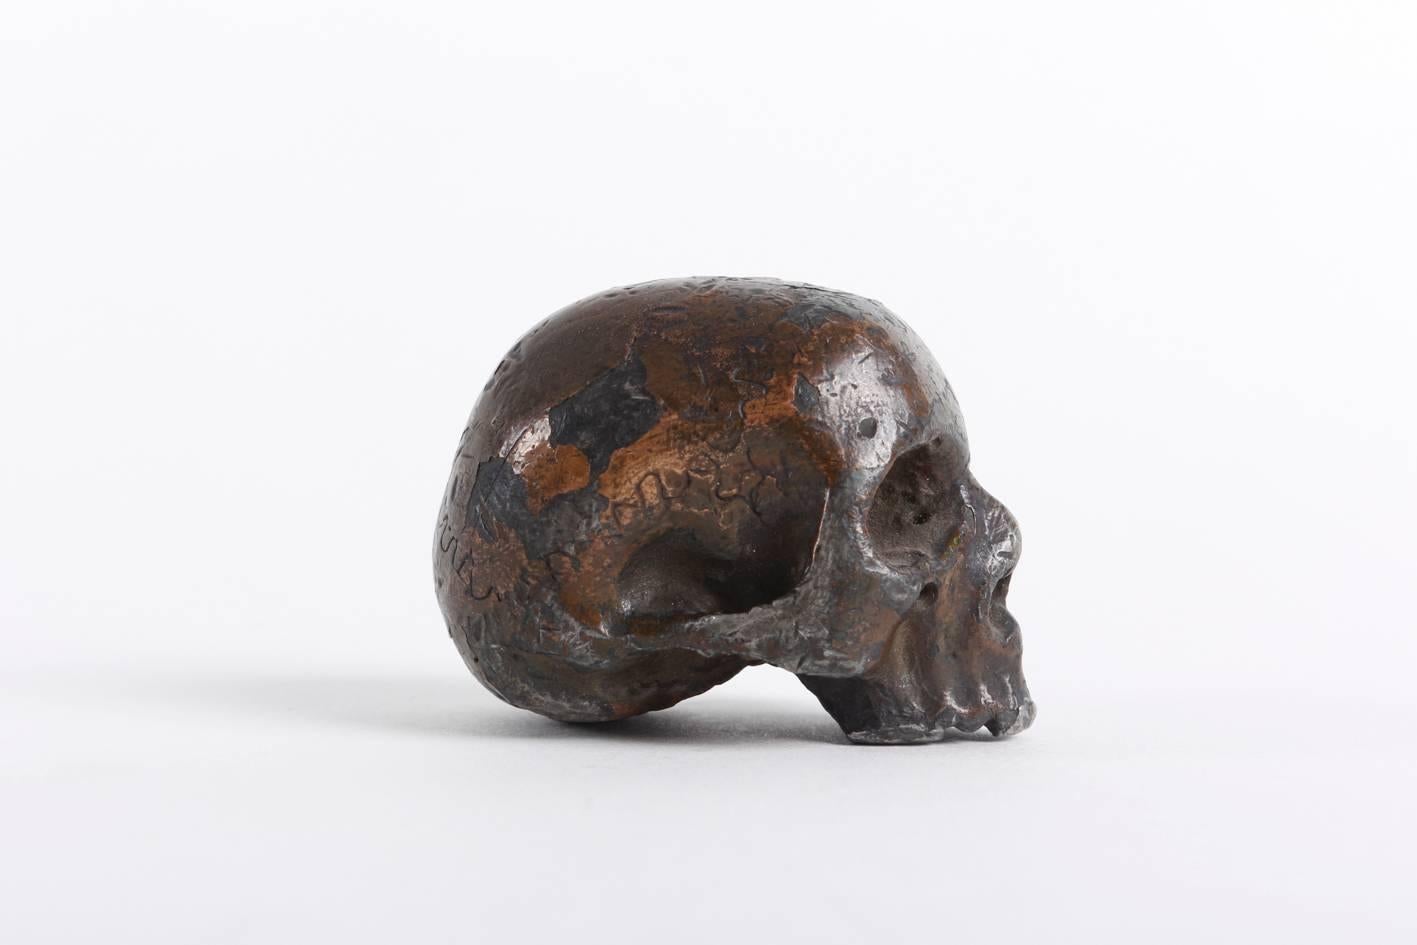 18th century, cast lead depicting a human Skull model.